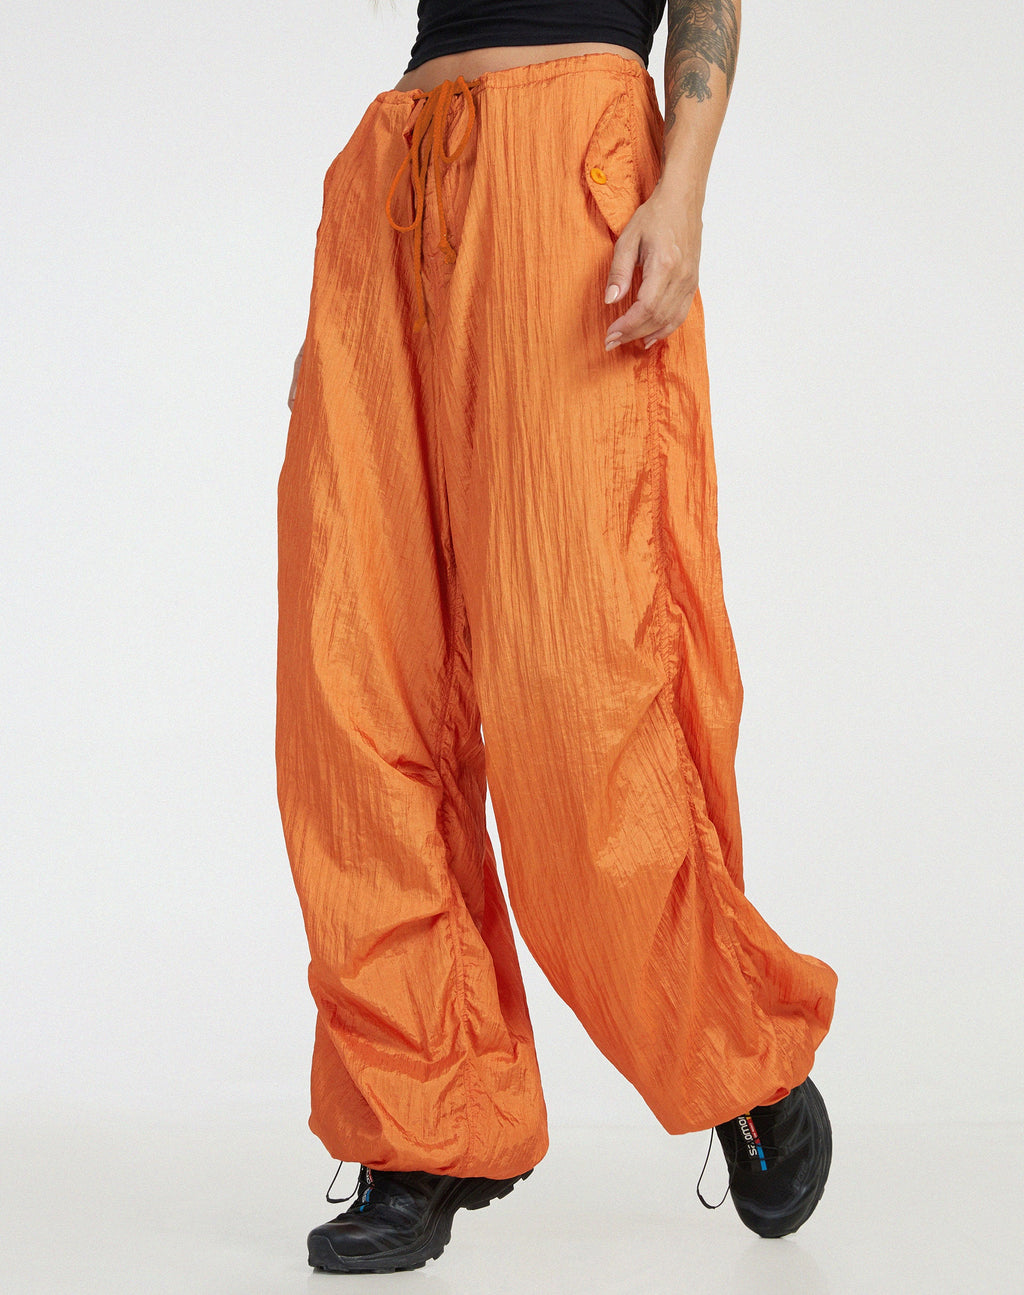 Chute Trouser in Parachute Pumpkin Orange